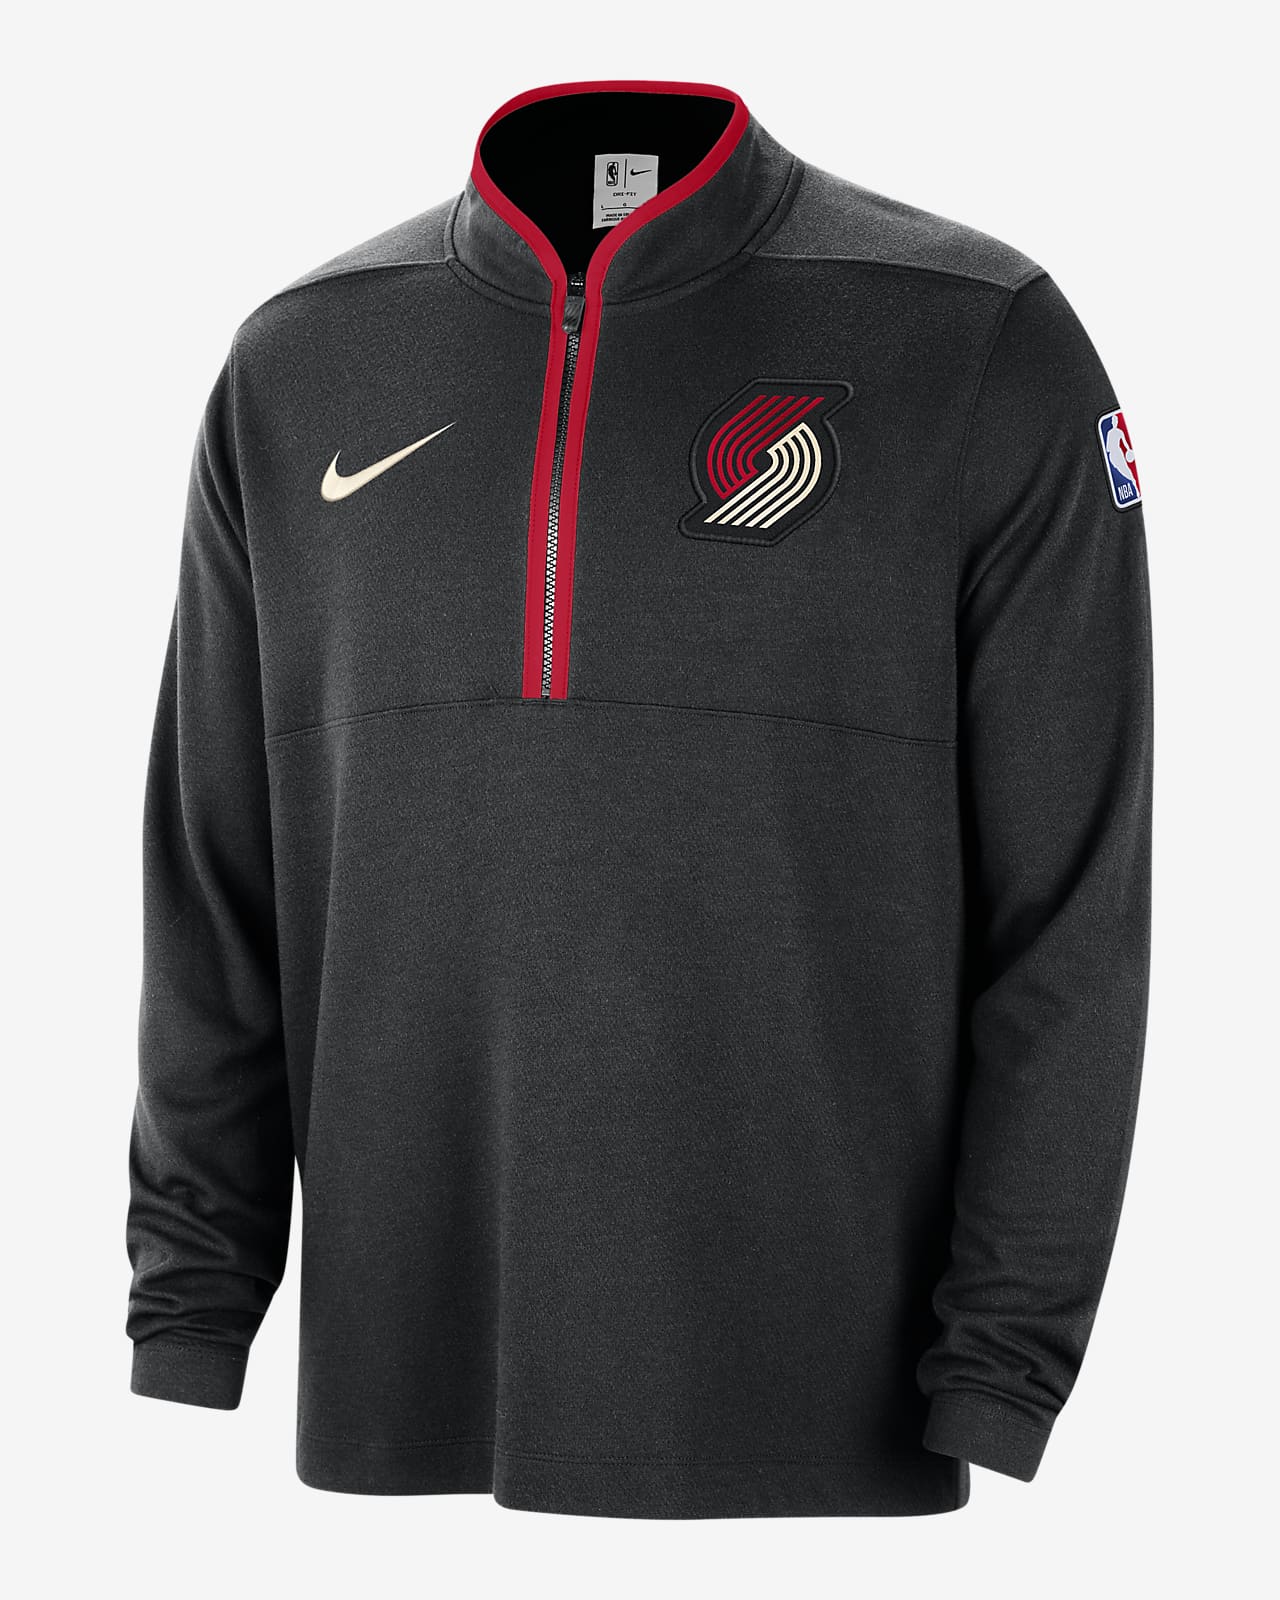 Portland Trail Blazers Men's Nike NBA Long-Sleeve T-Shirt